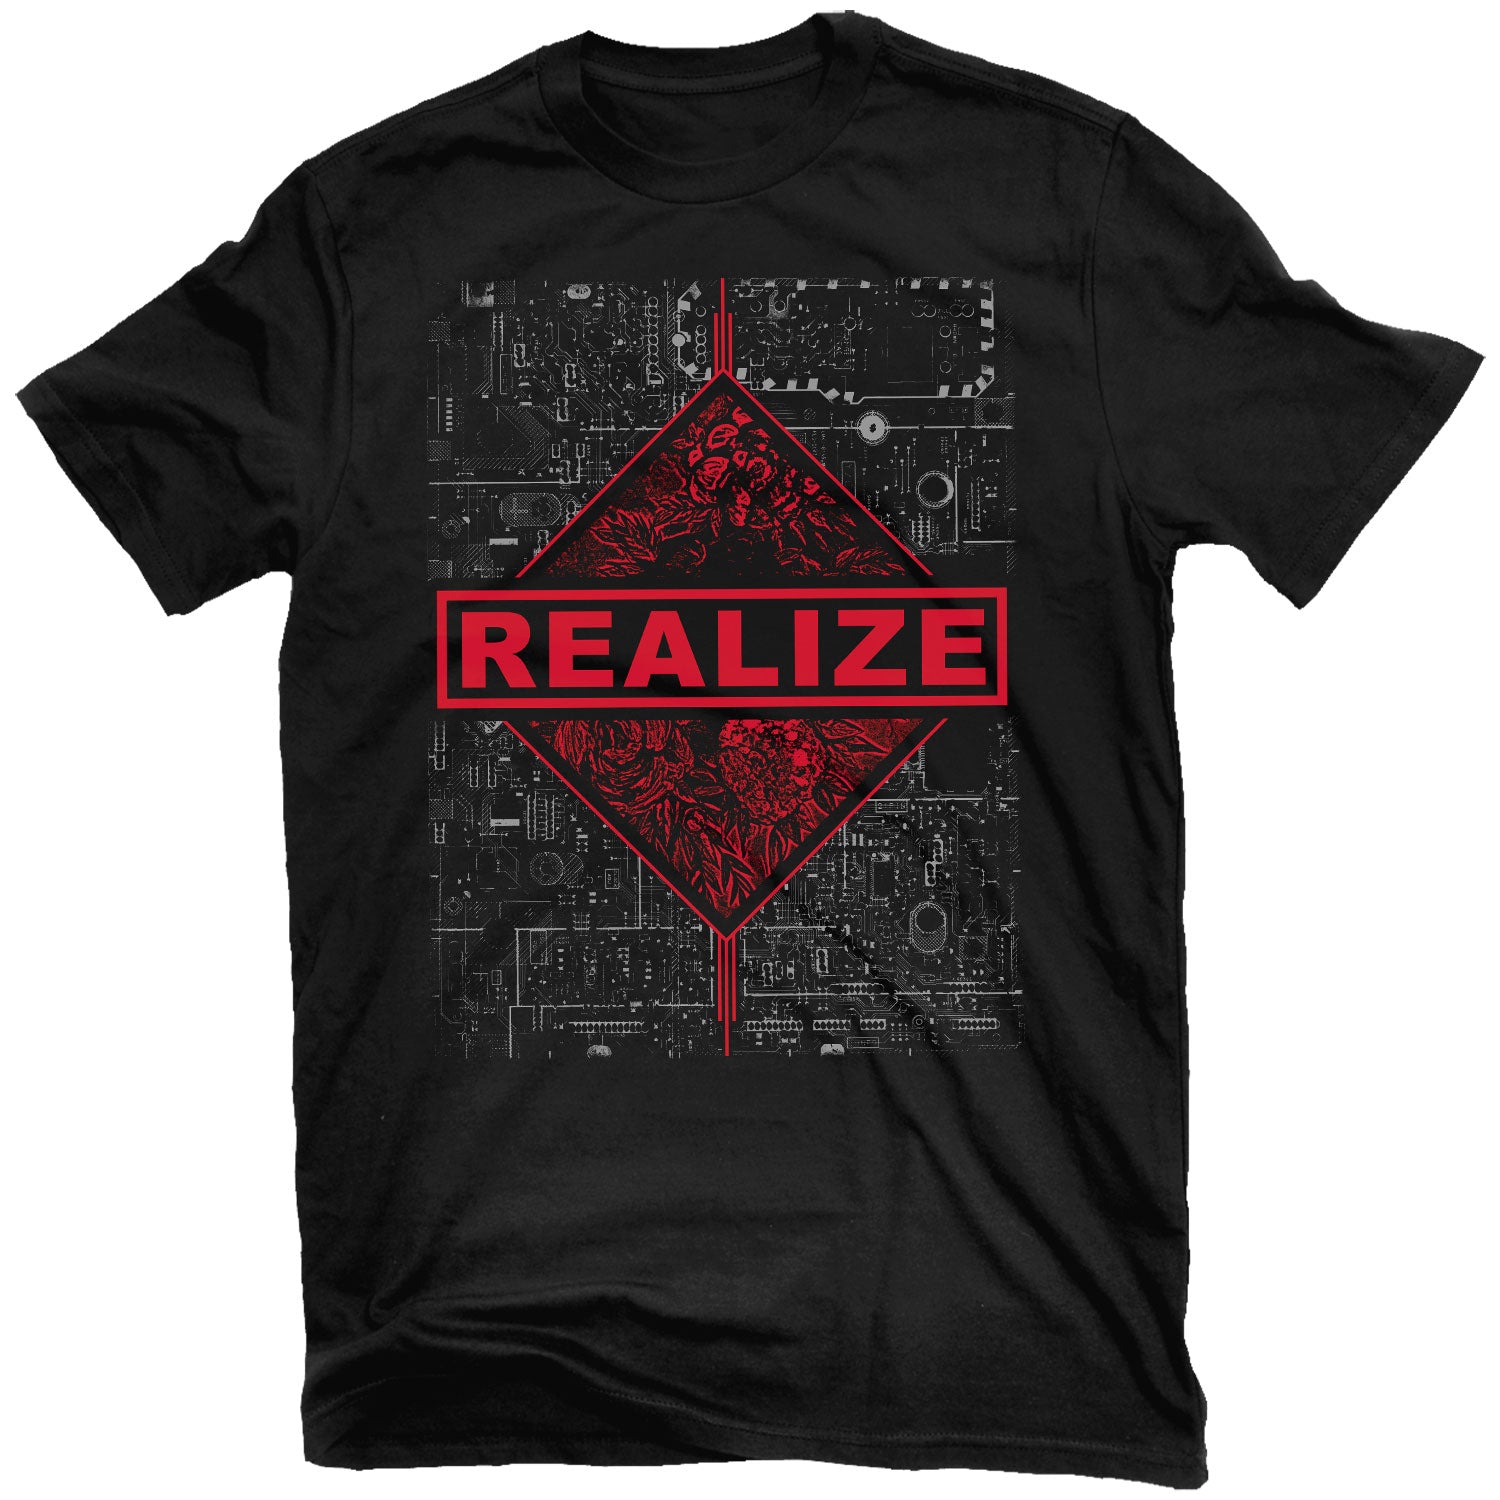 Realize "Machine Violence" T-Shirt